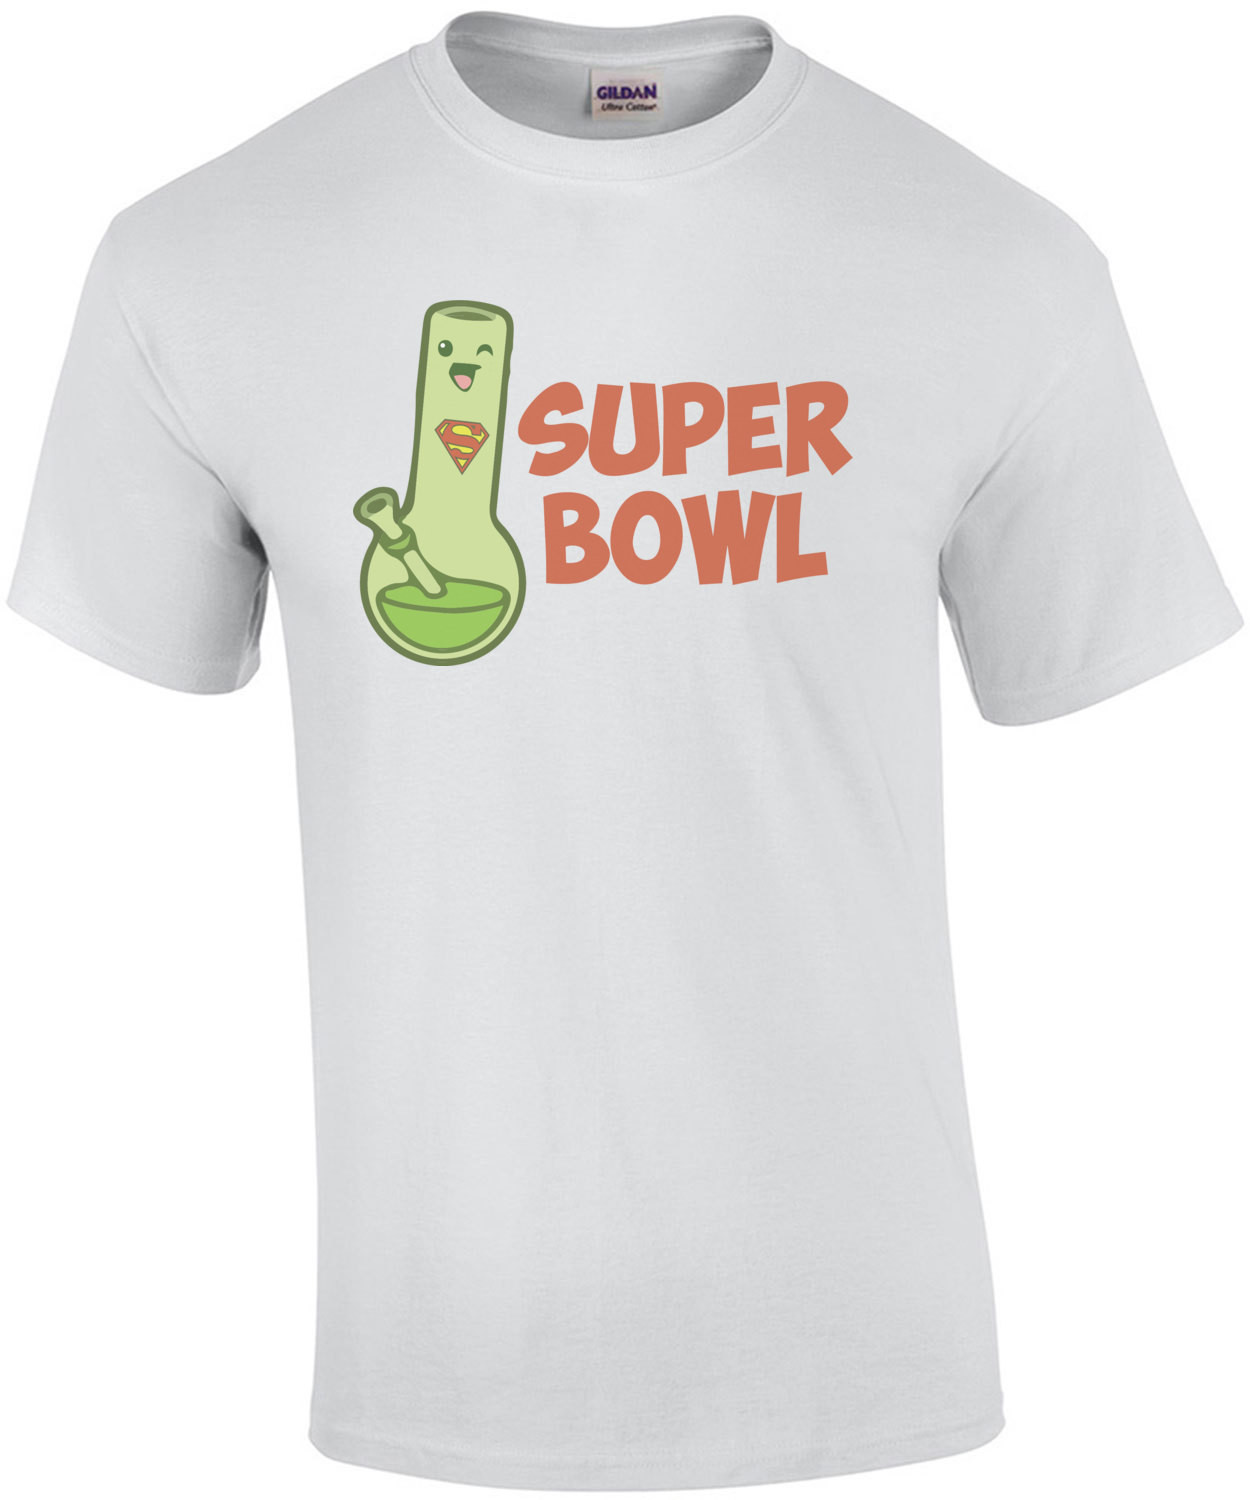 Super Bowl Marijuana Parody T-Shirt